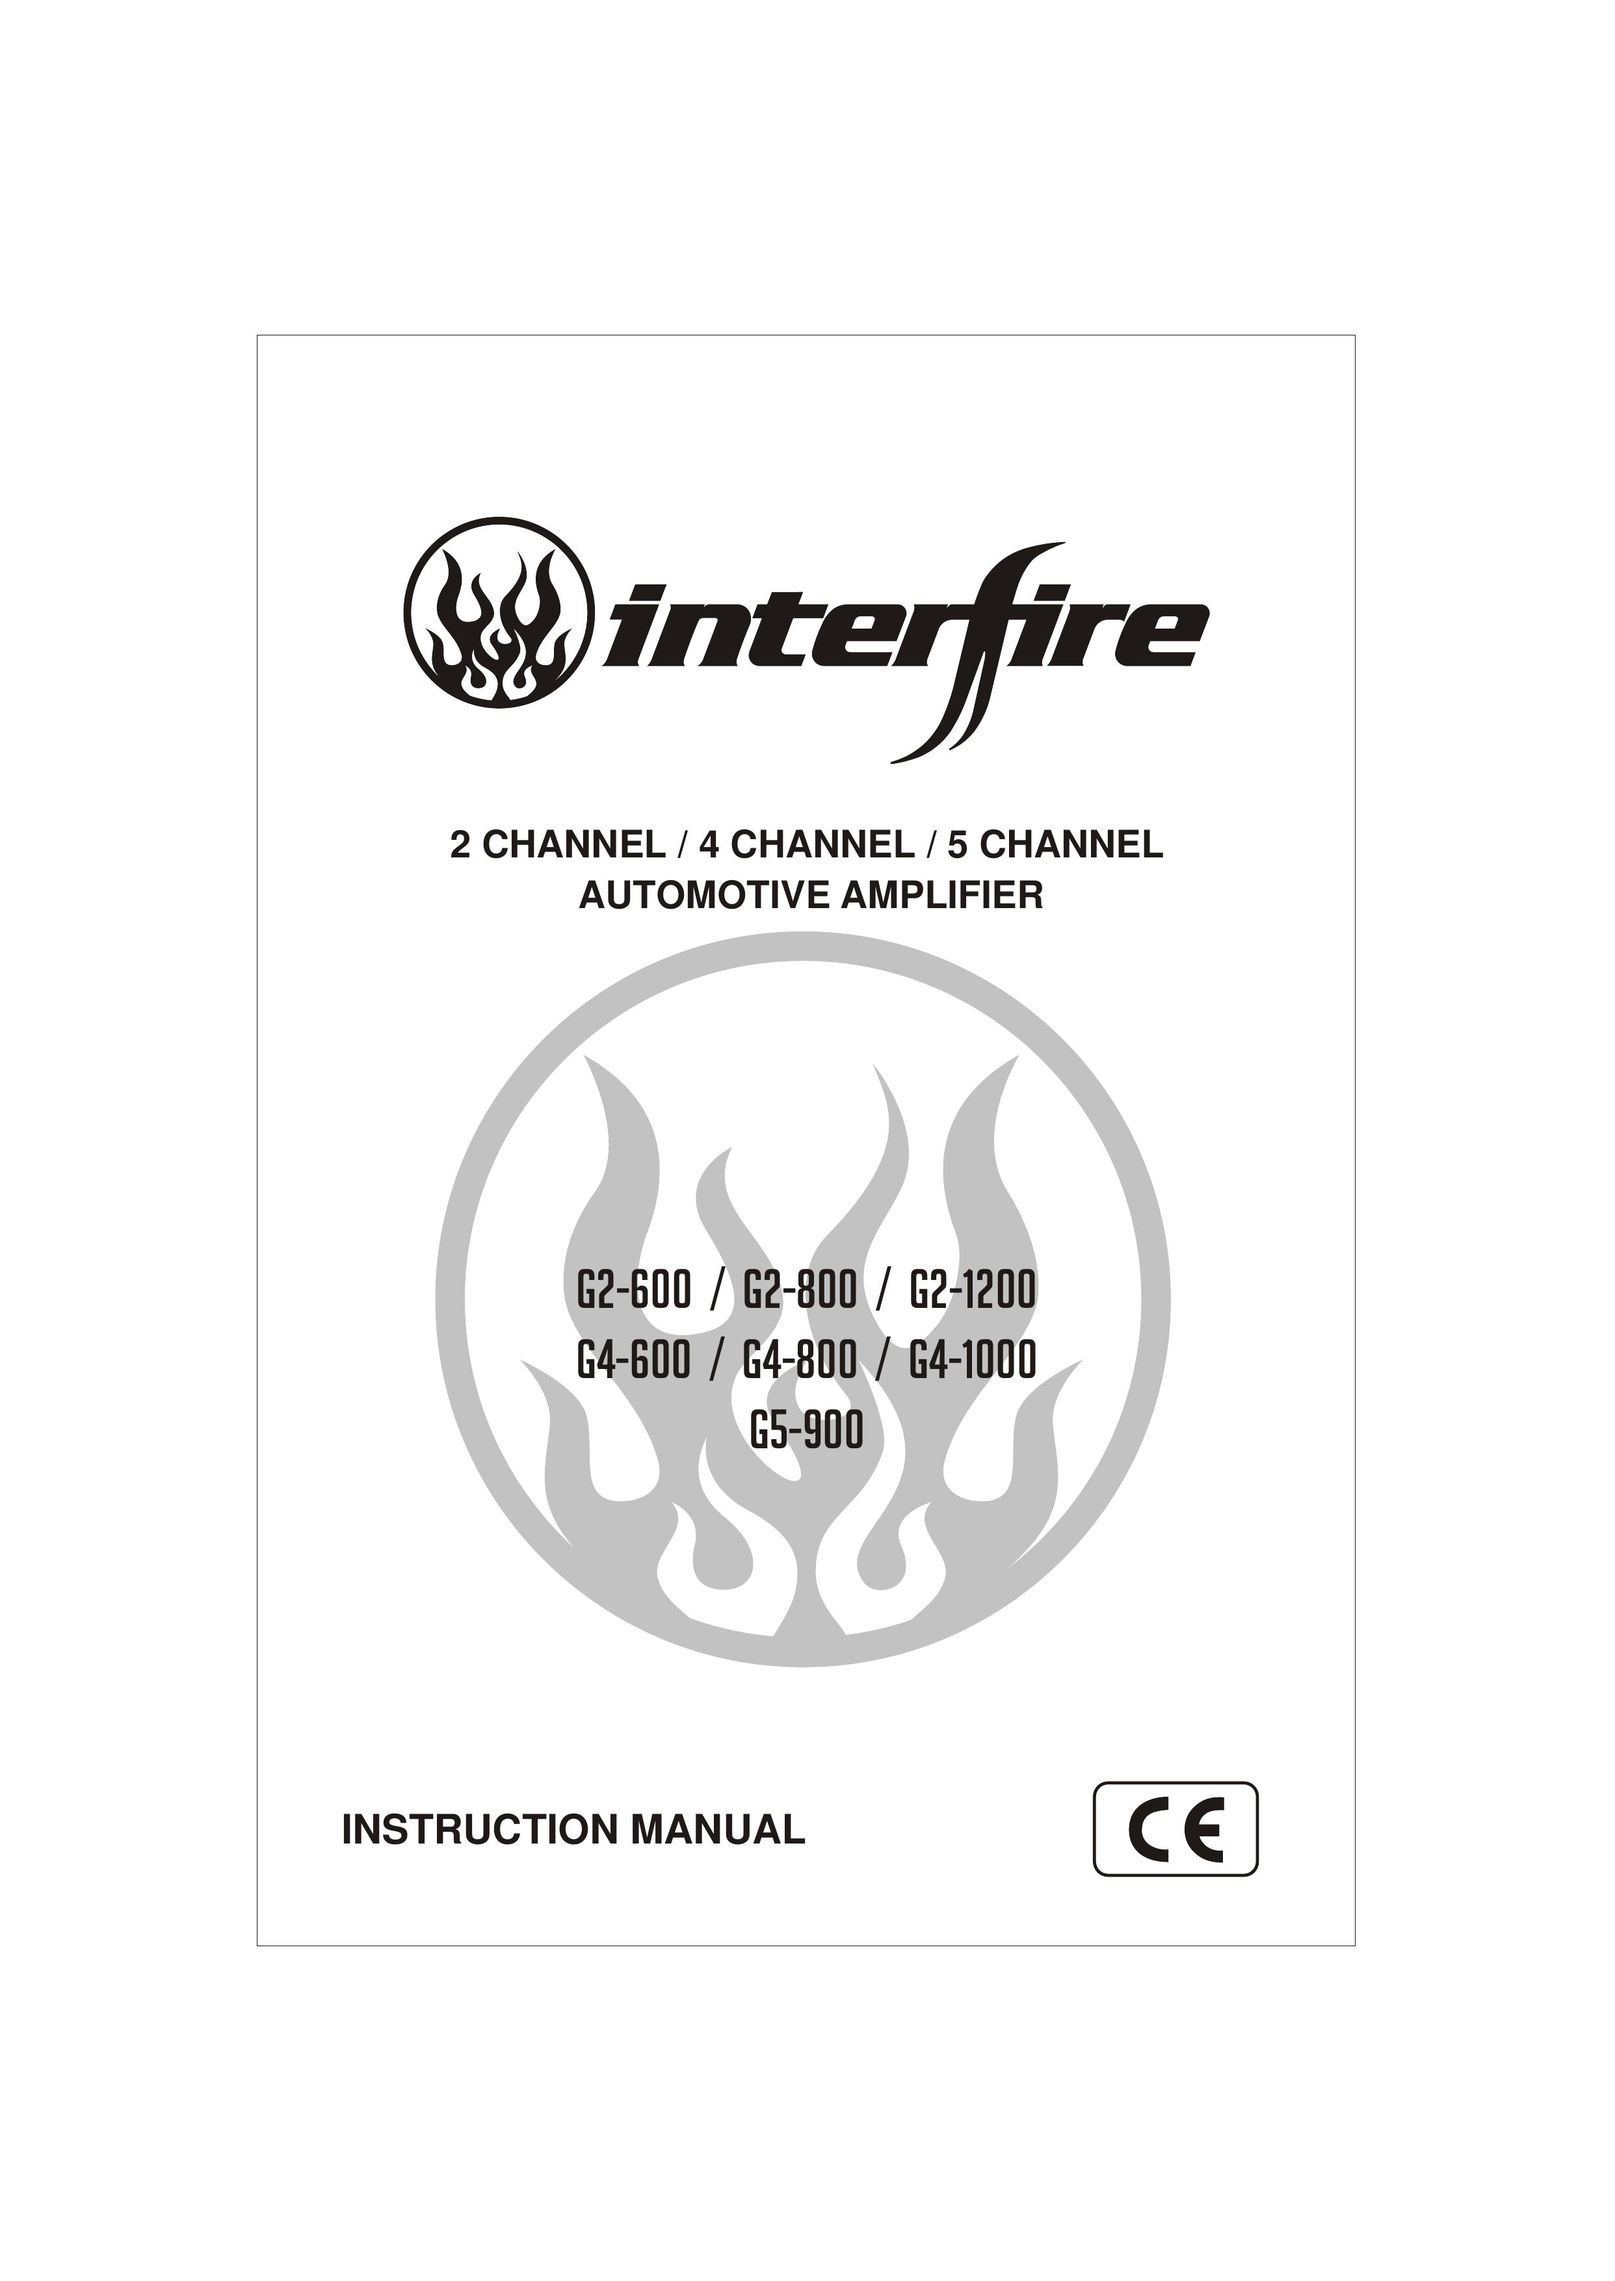 Interfire Audio G4-1000 Car Amplifier User Manual